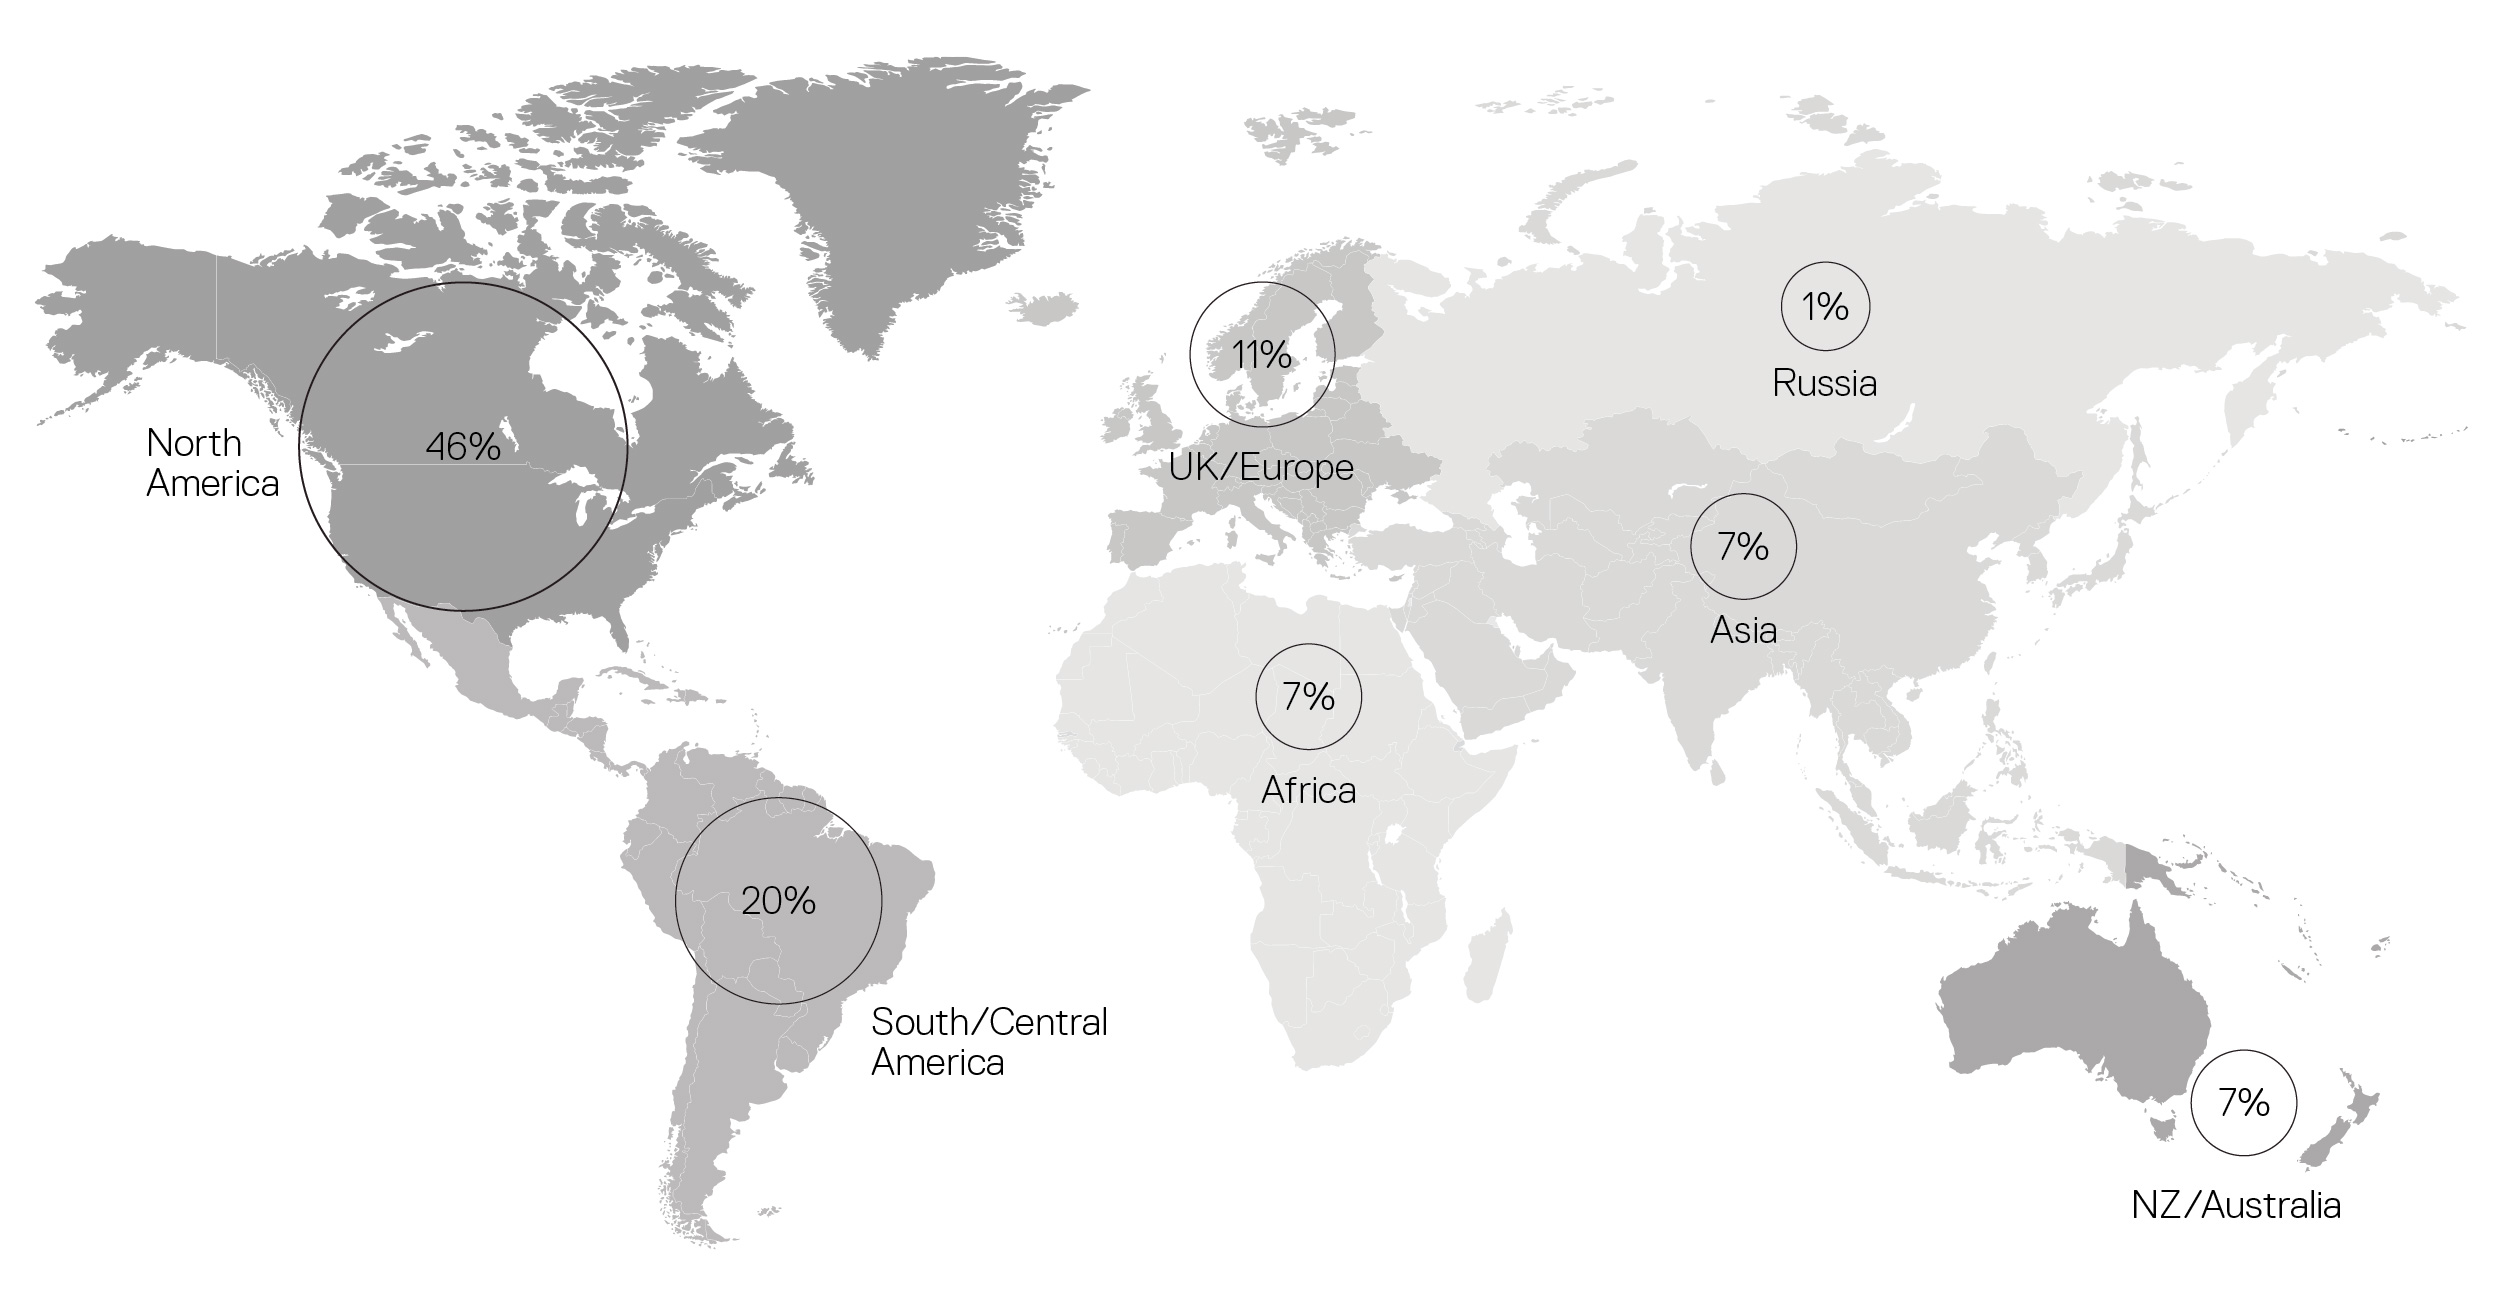 Geoprofessionals Data Management global participants